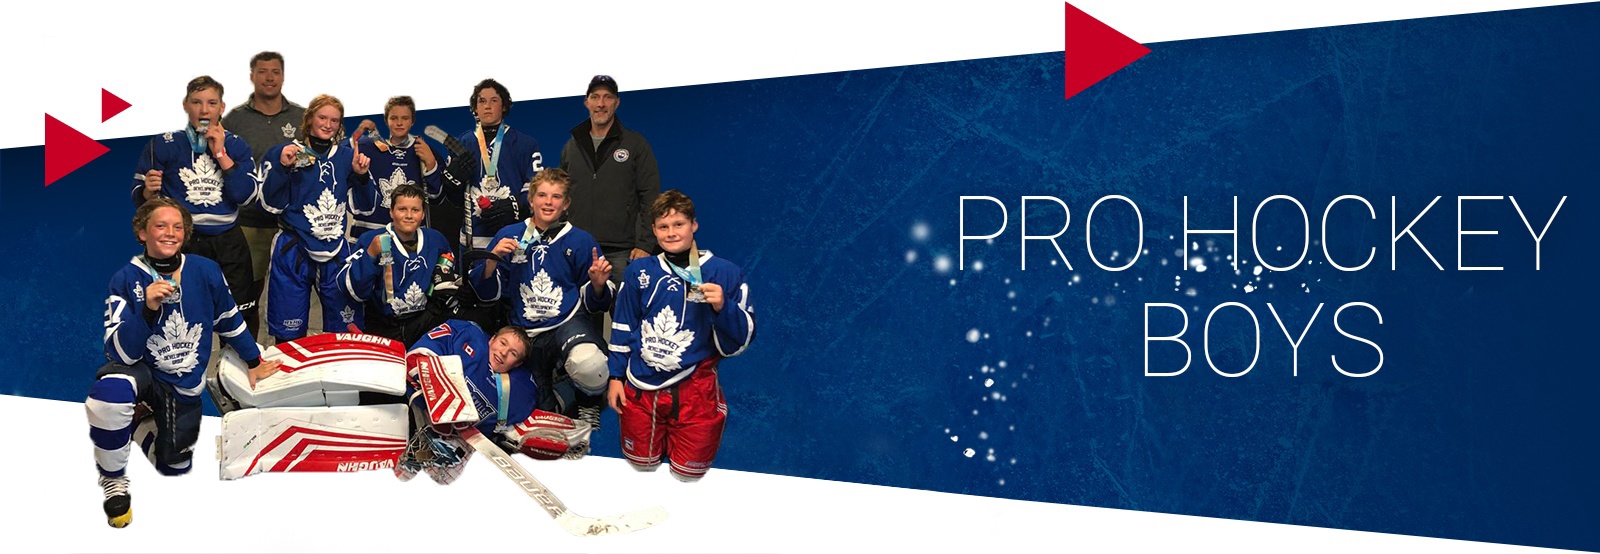 Boys Hockey Training and Development Programs by Pro Hockey Development Group